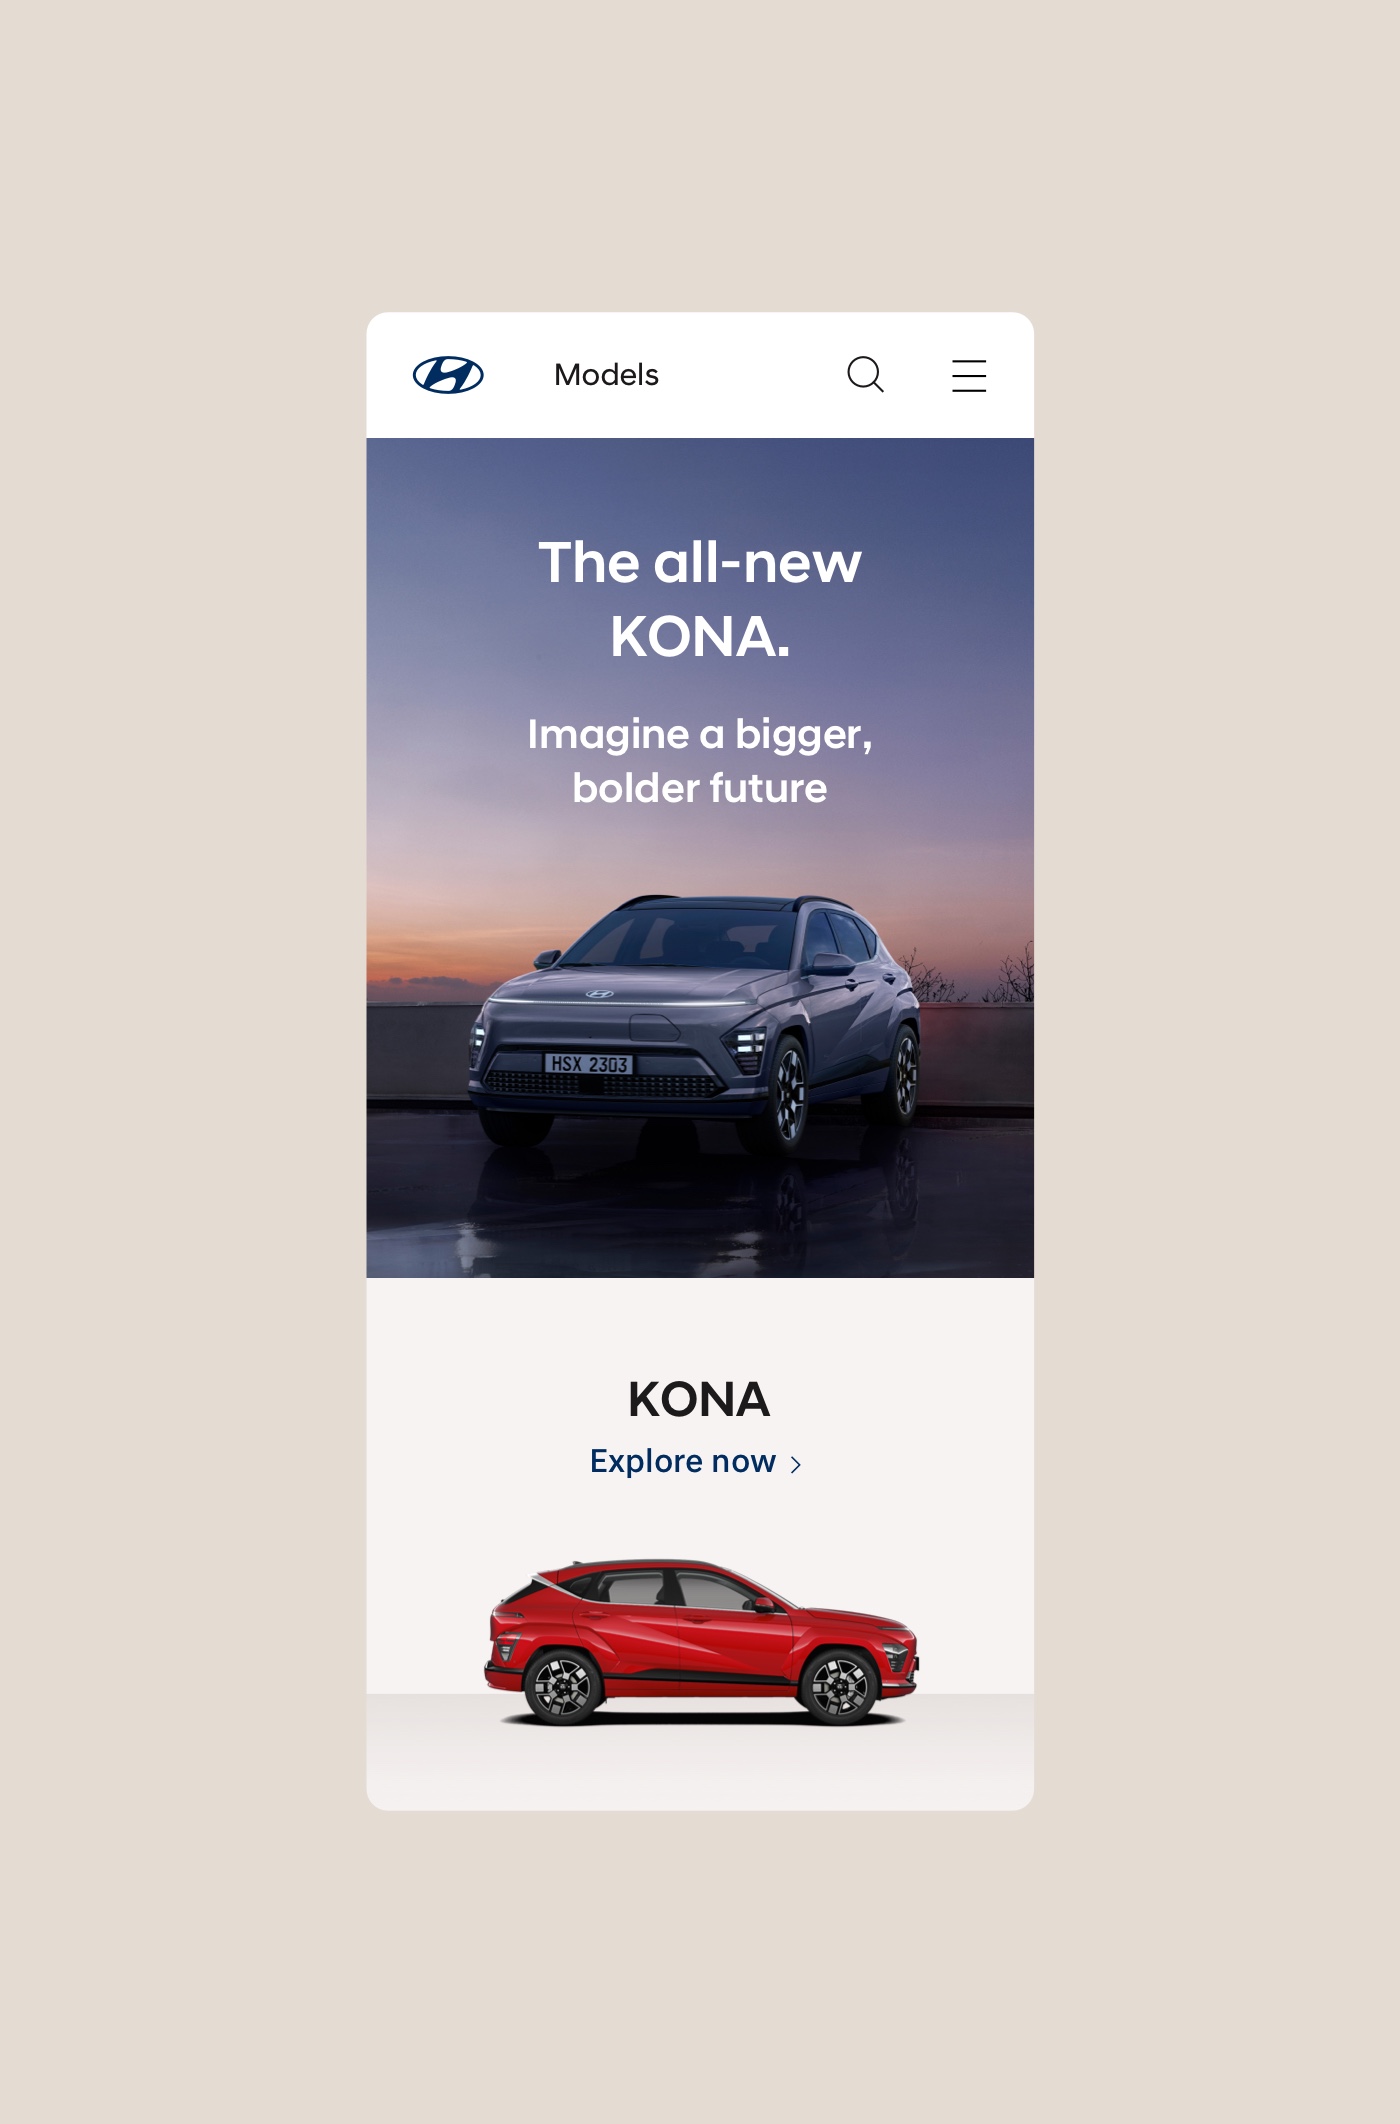 Mobile advertisement for the all-new Hyundai KONA